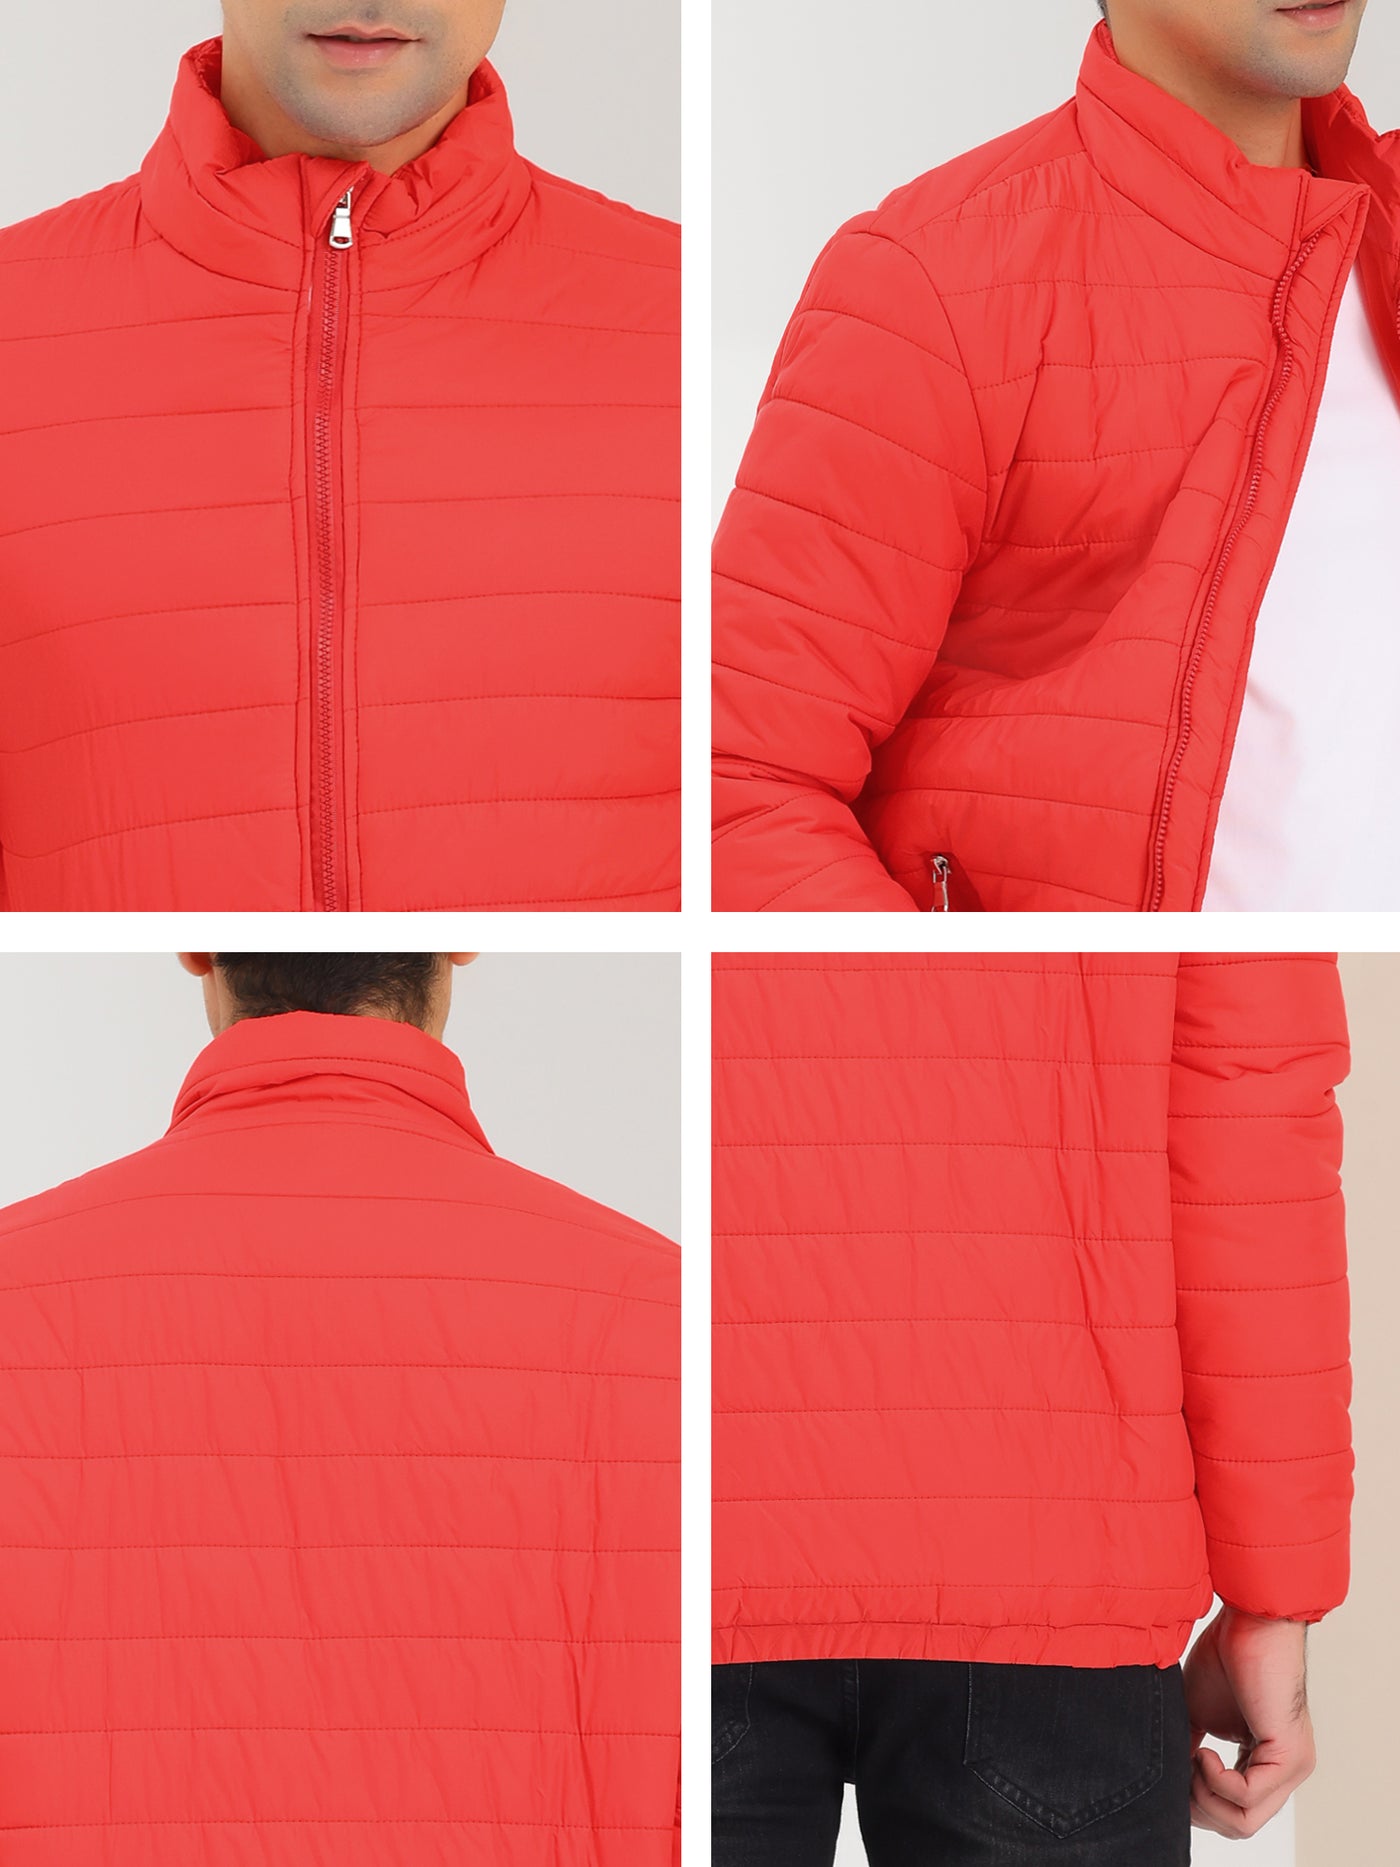 Bublédon Men's Puffer Jacket Winter Warm Full Zip Stand Collar Quilting Coat